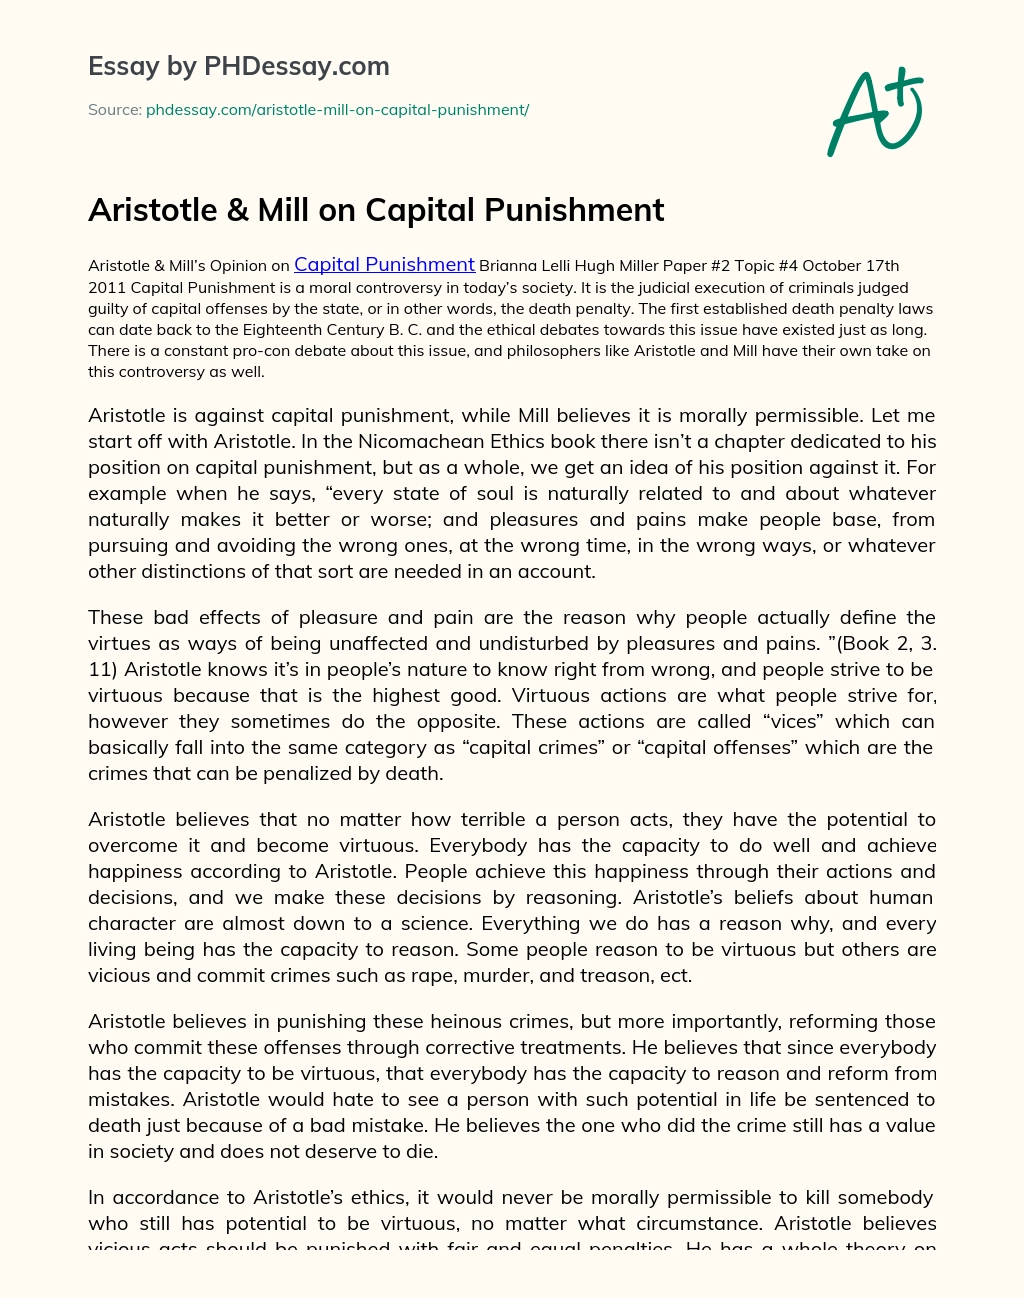 Aristotle & Mill on Capital Punishment essay